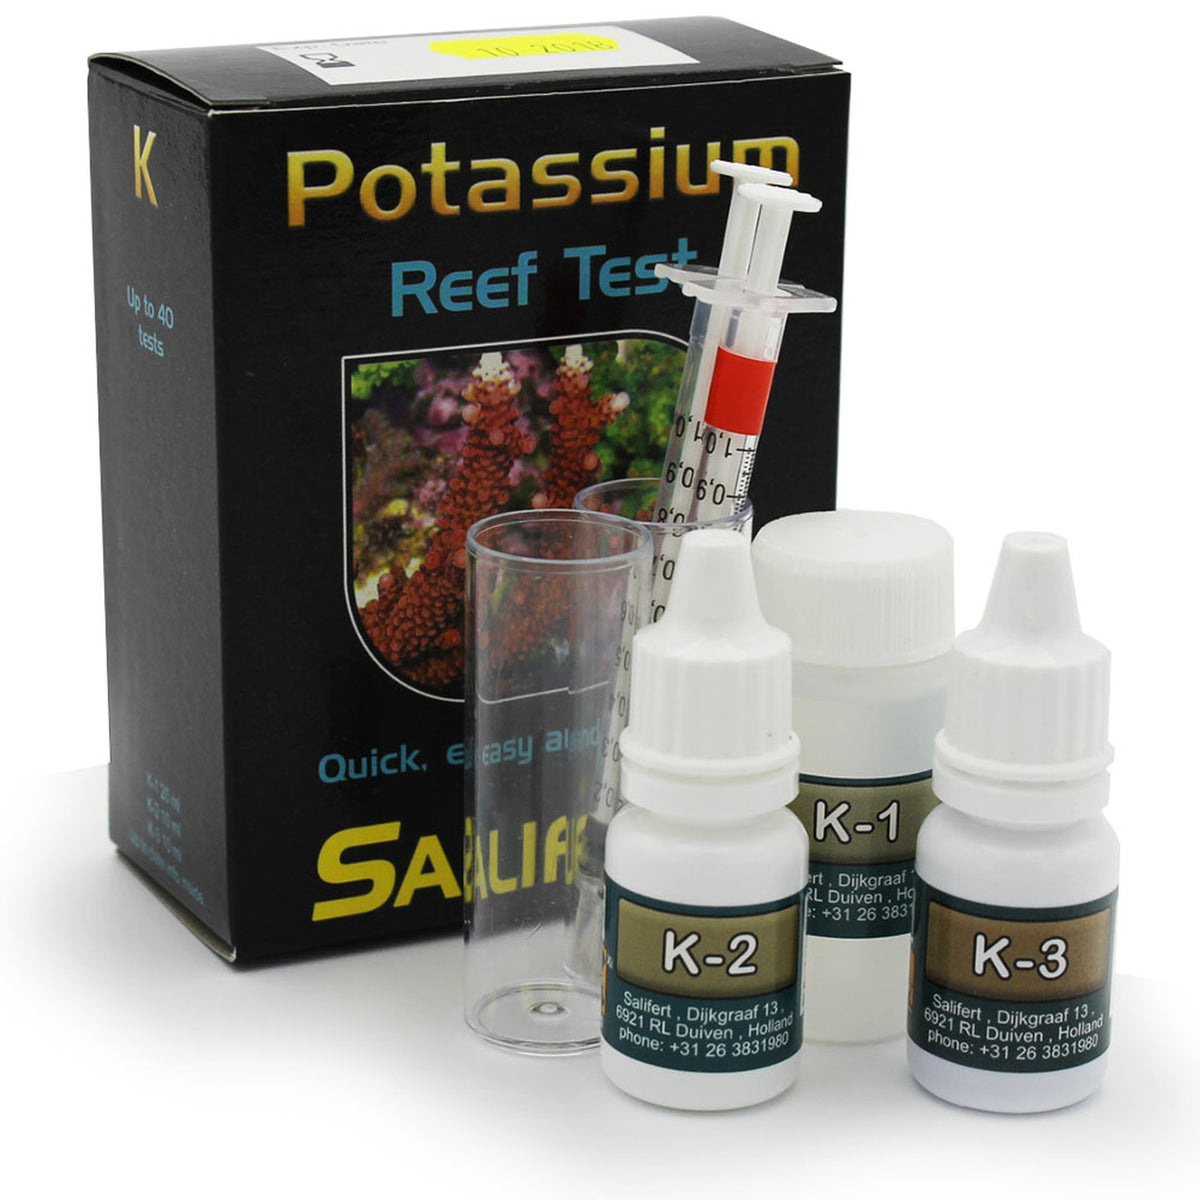 Salifert Potassium Reef Test